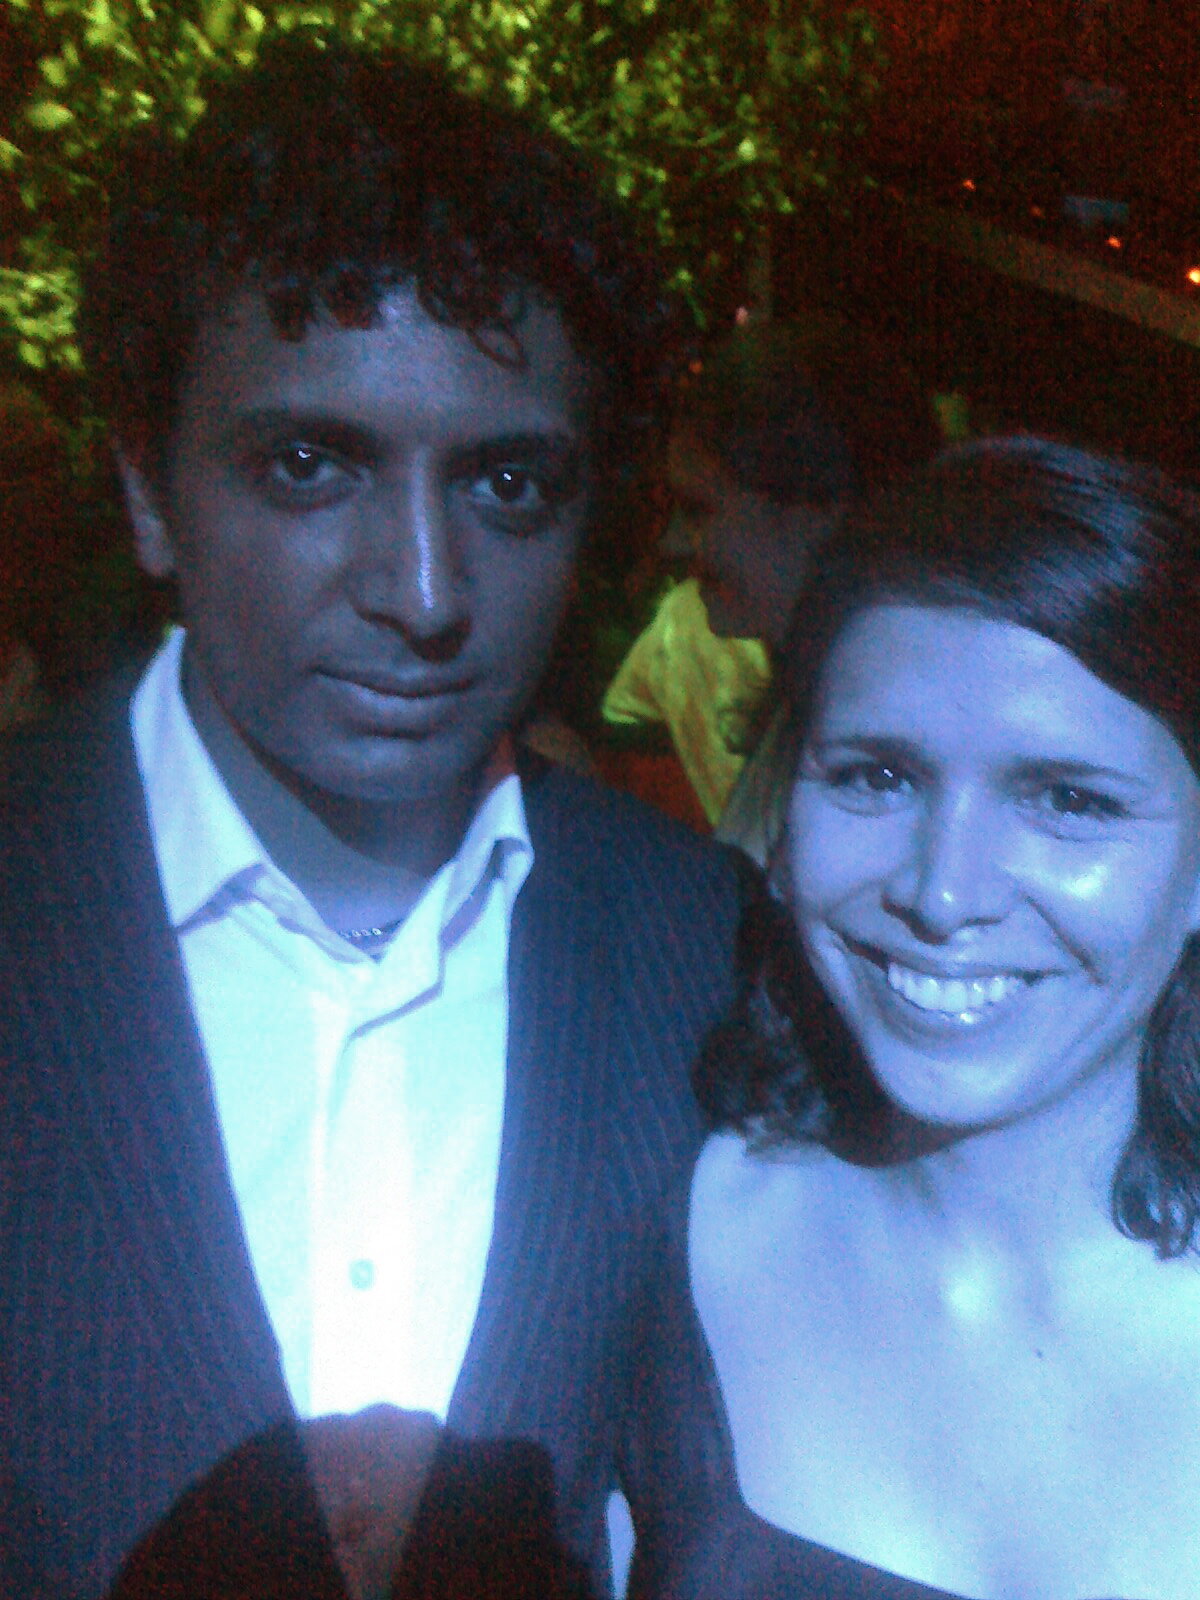 Ana Cuadra with M. Night Shyamalan at an event